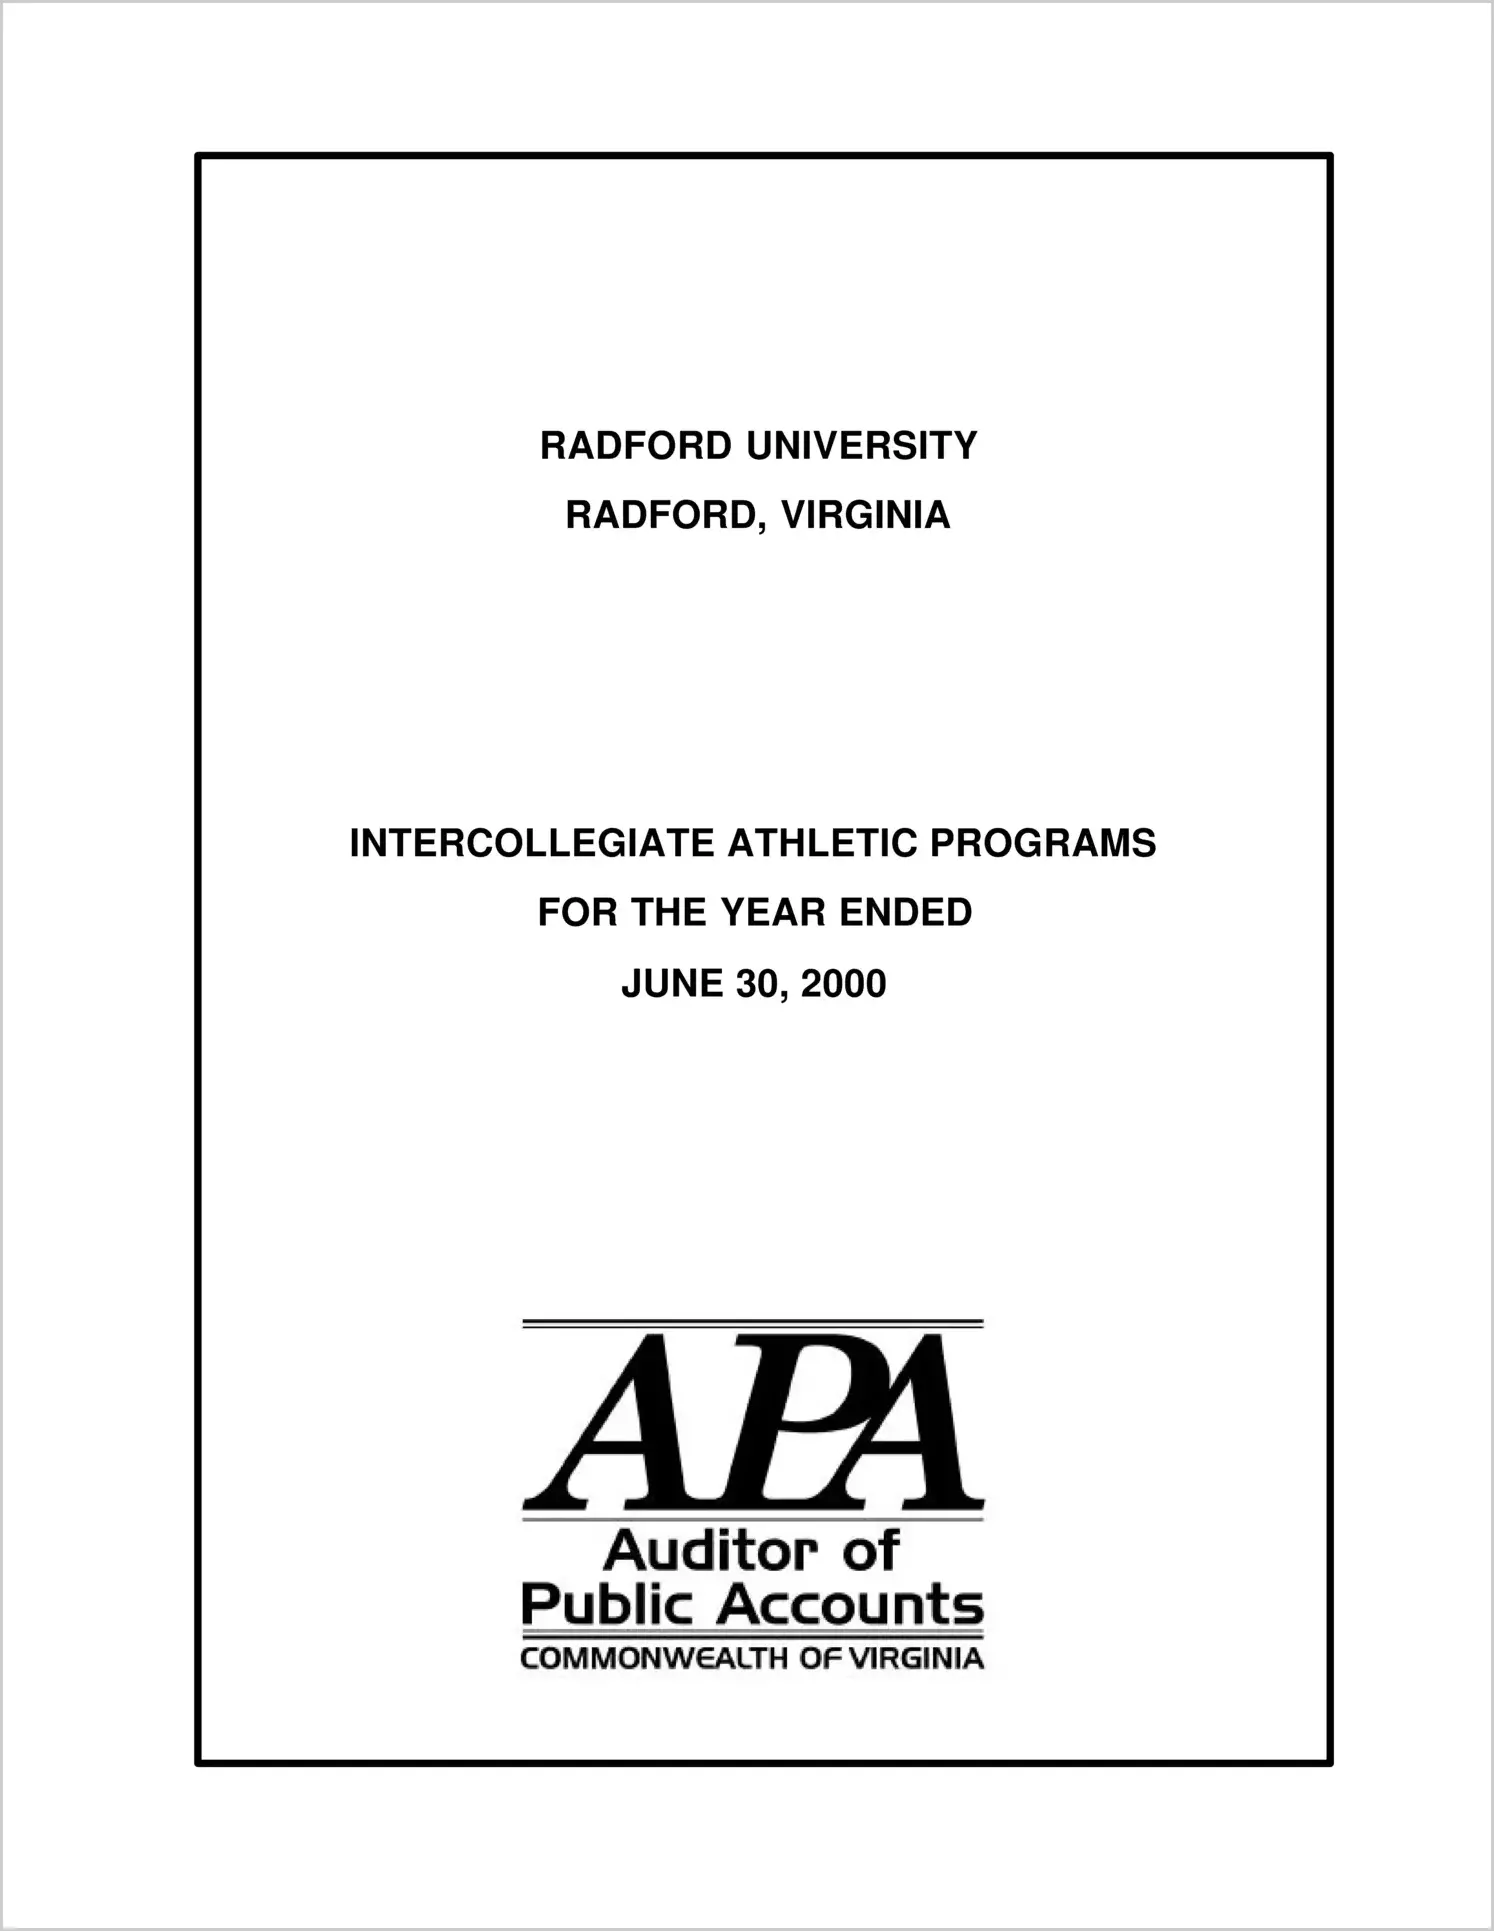 Radford University Intercollegiate Athletic Programs for the year ended June 30, 2000